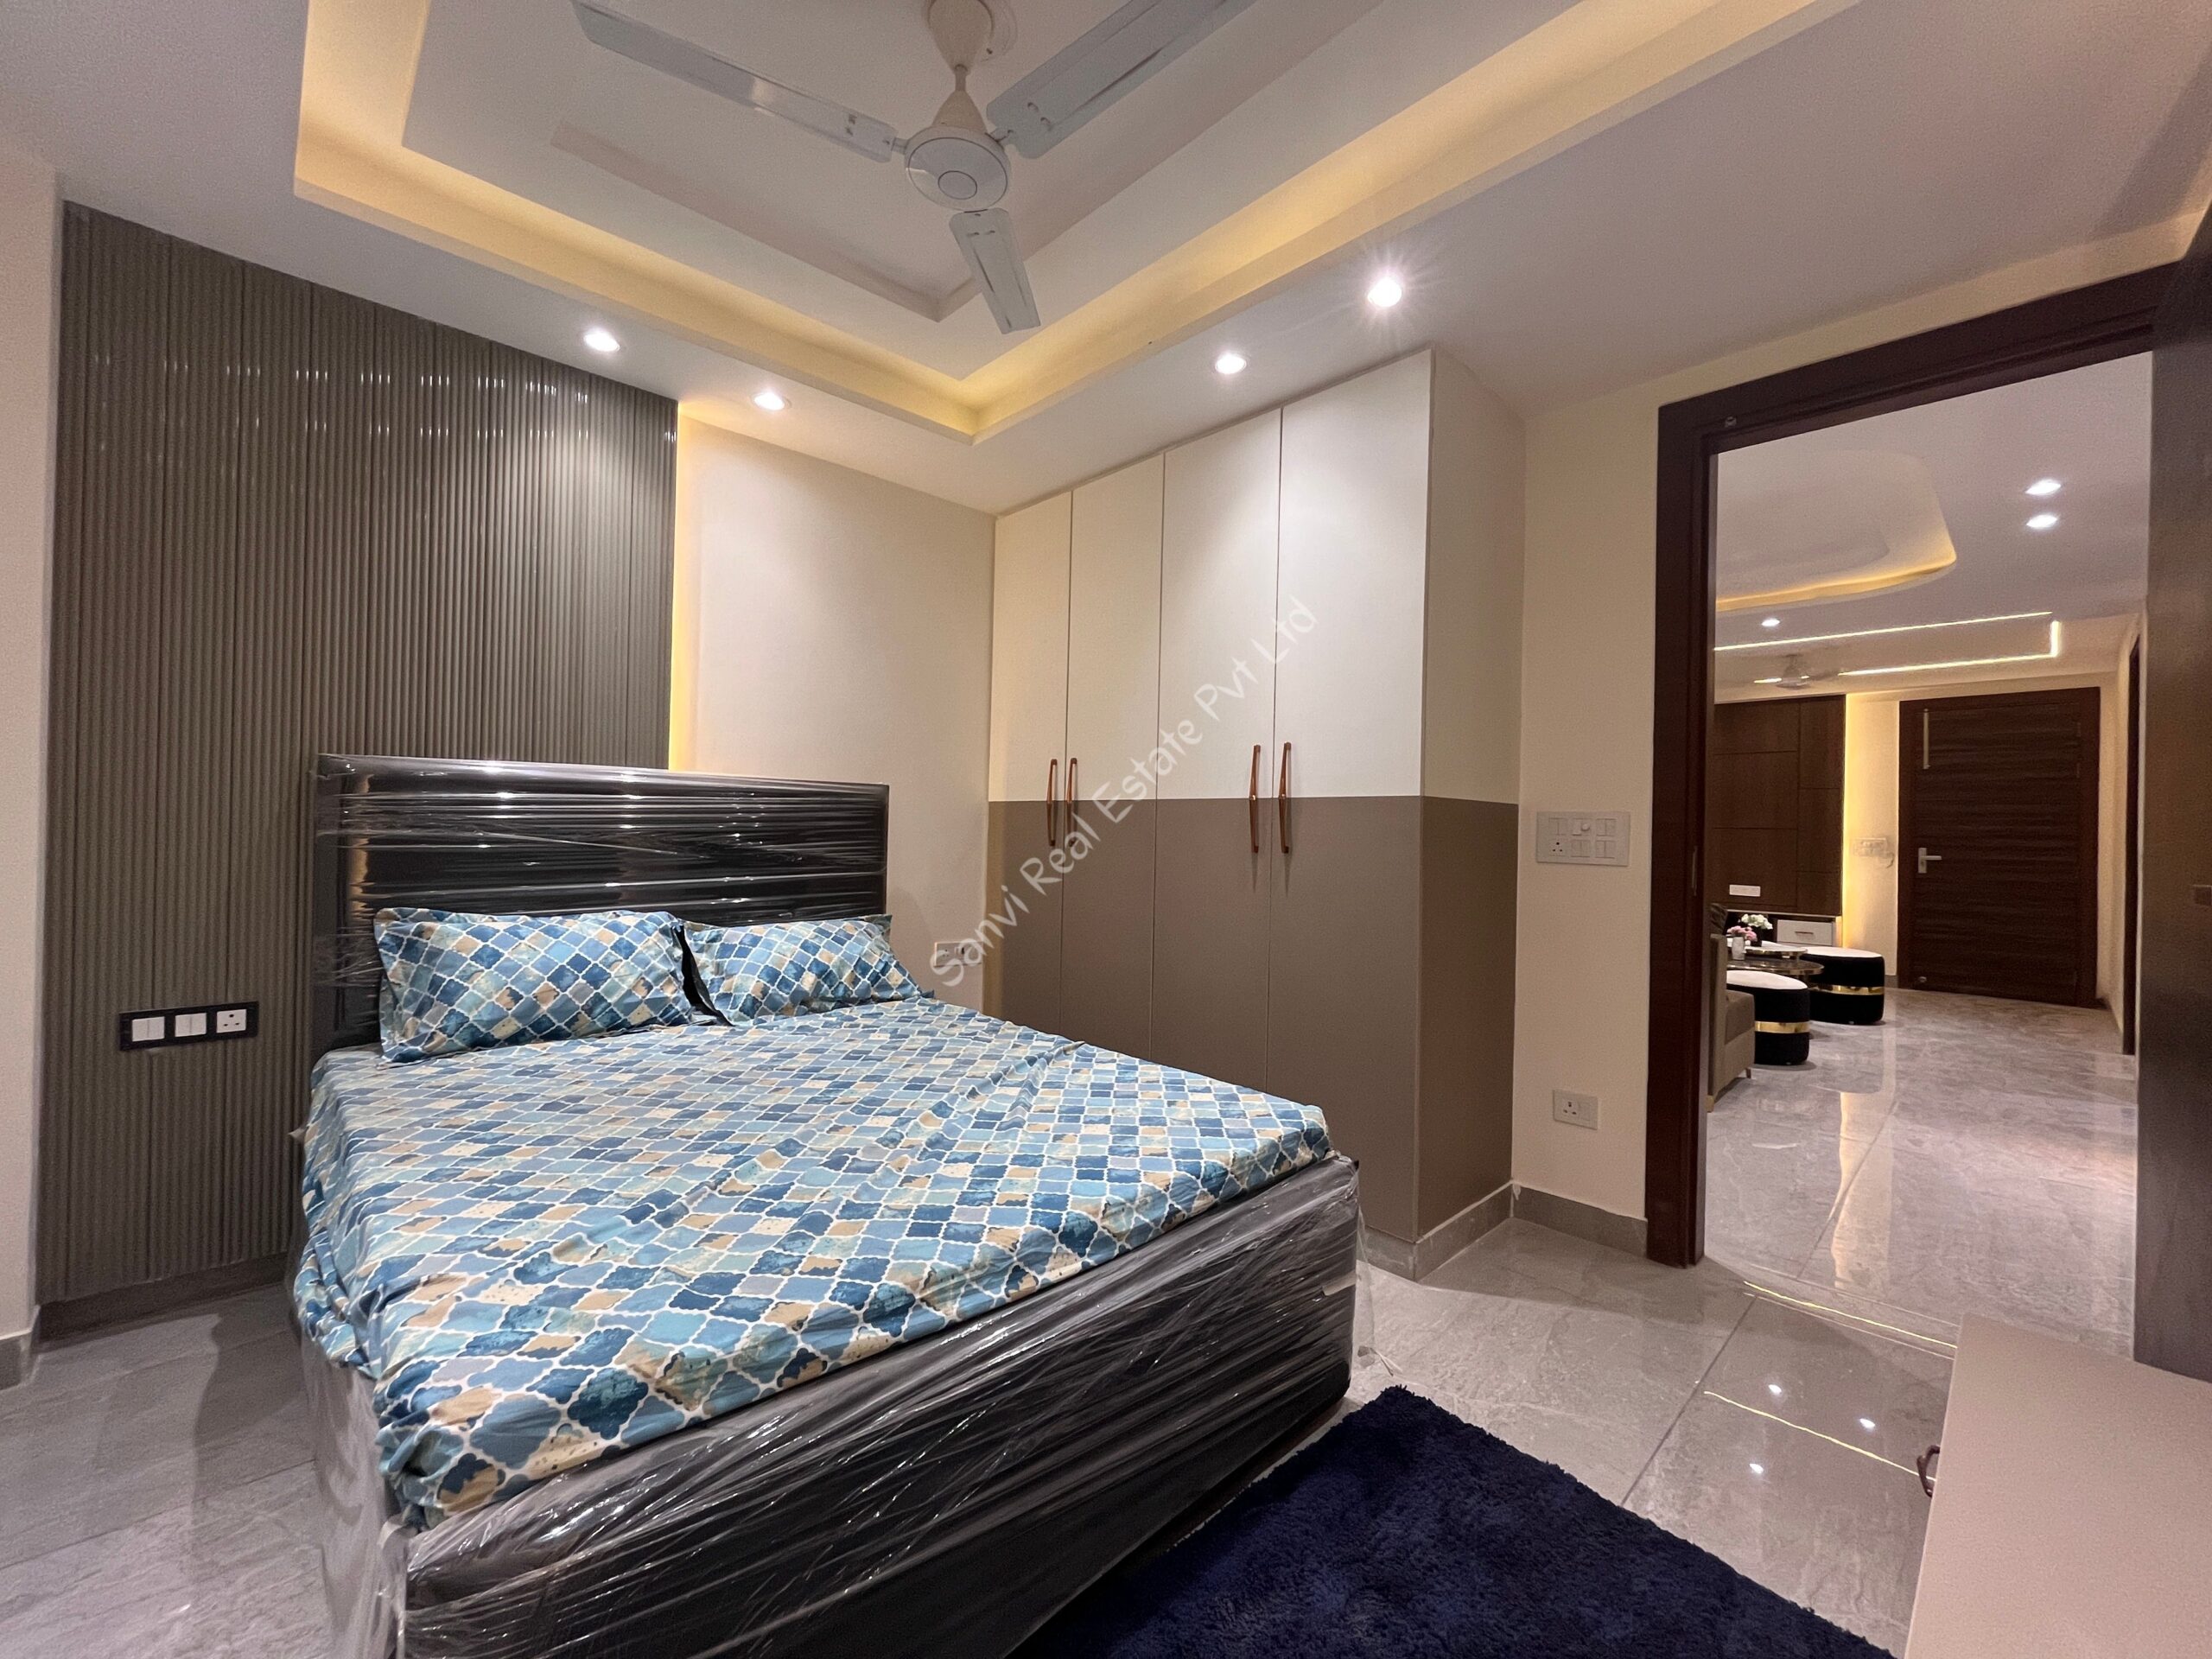 3 BHK Flat in Uttam Nagar | M-Sanvi Real Estate | Top Real Estate in Dwarka Mor